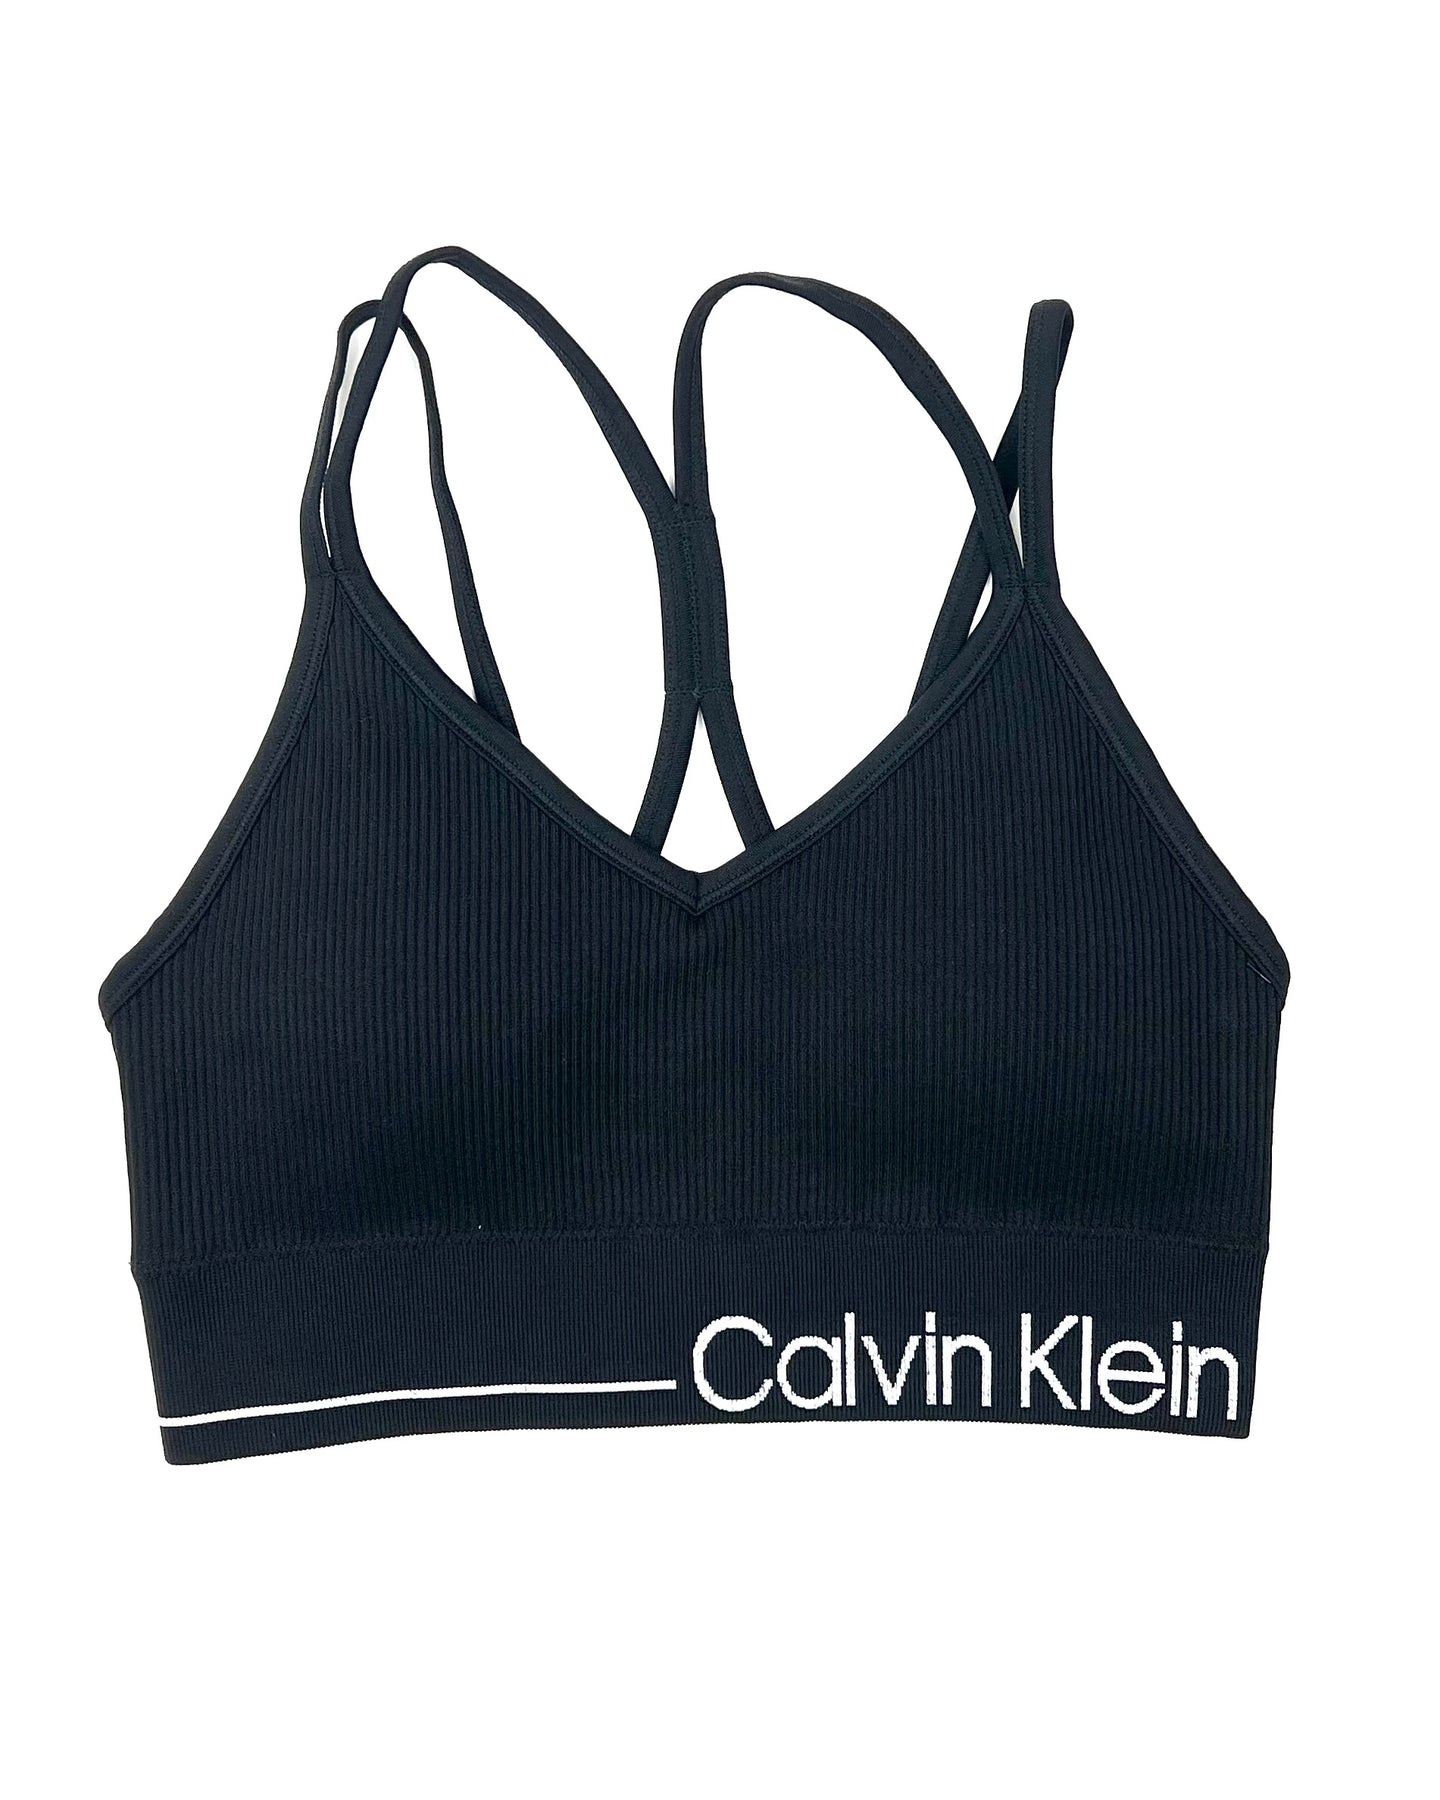 Calvin Klein Black Ribbed V-Neck Sports Bra - Small – The Fashion Foundation